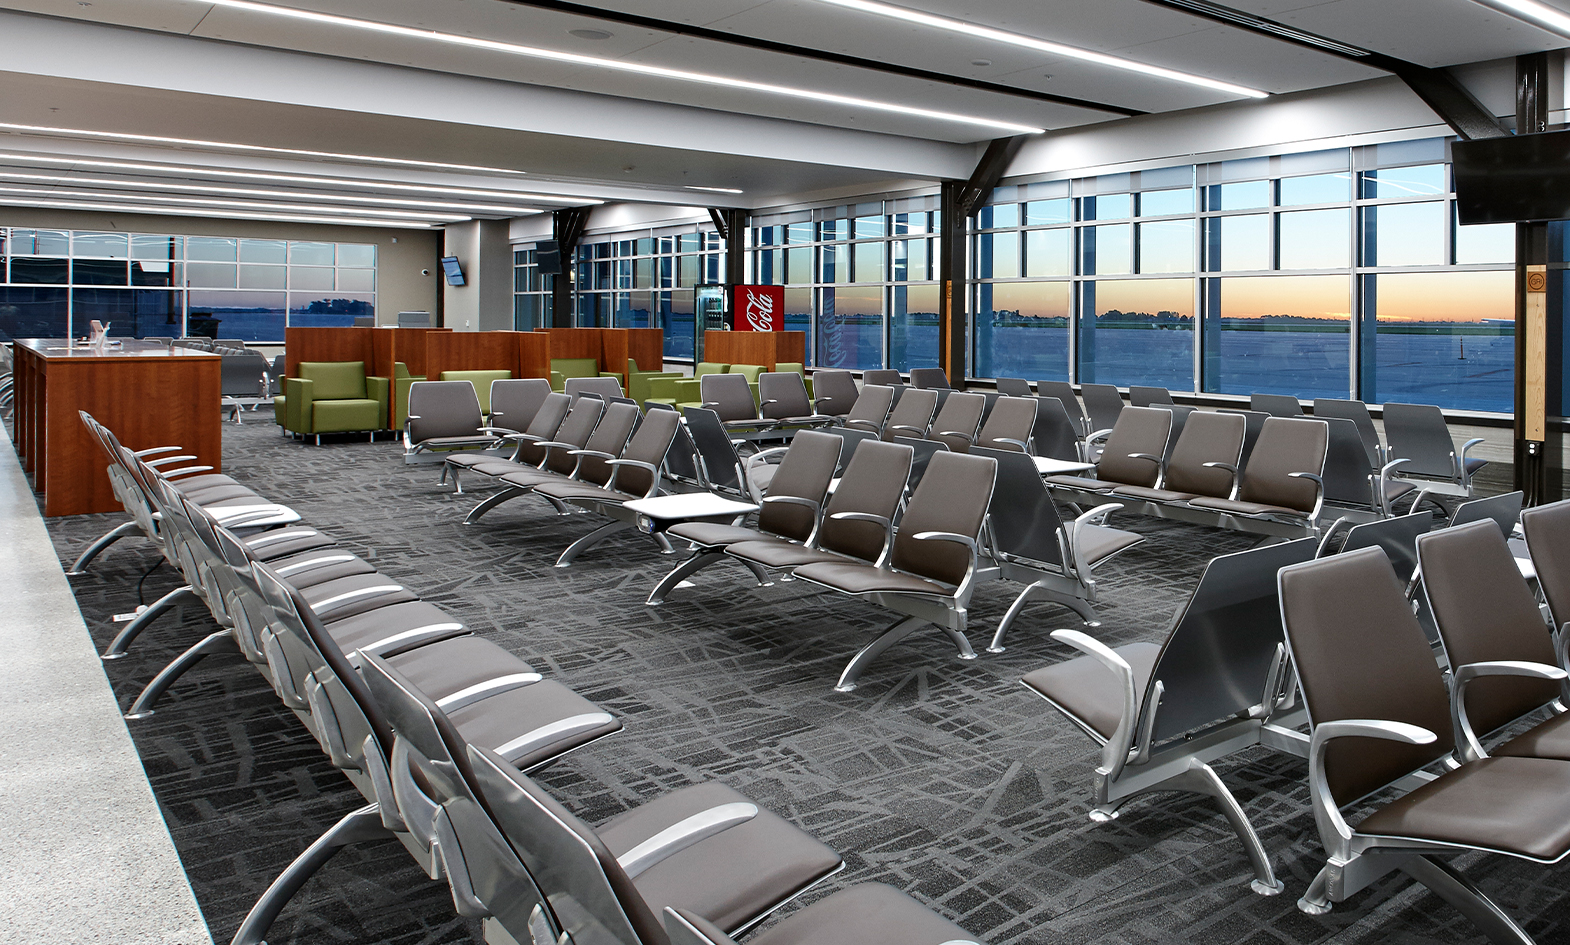 installation-image-grand-island-airport-gee-1570x945